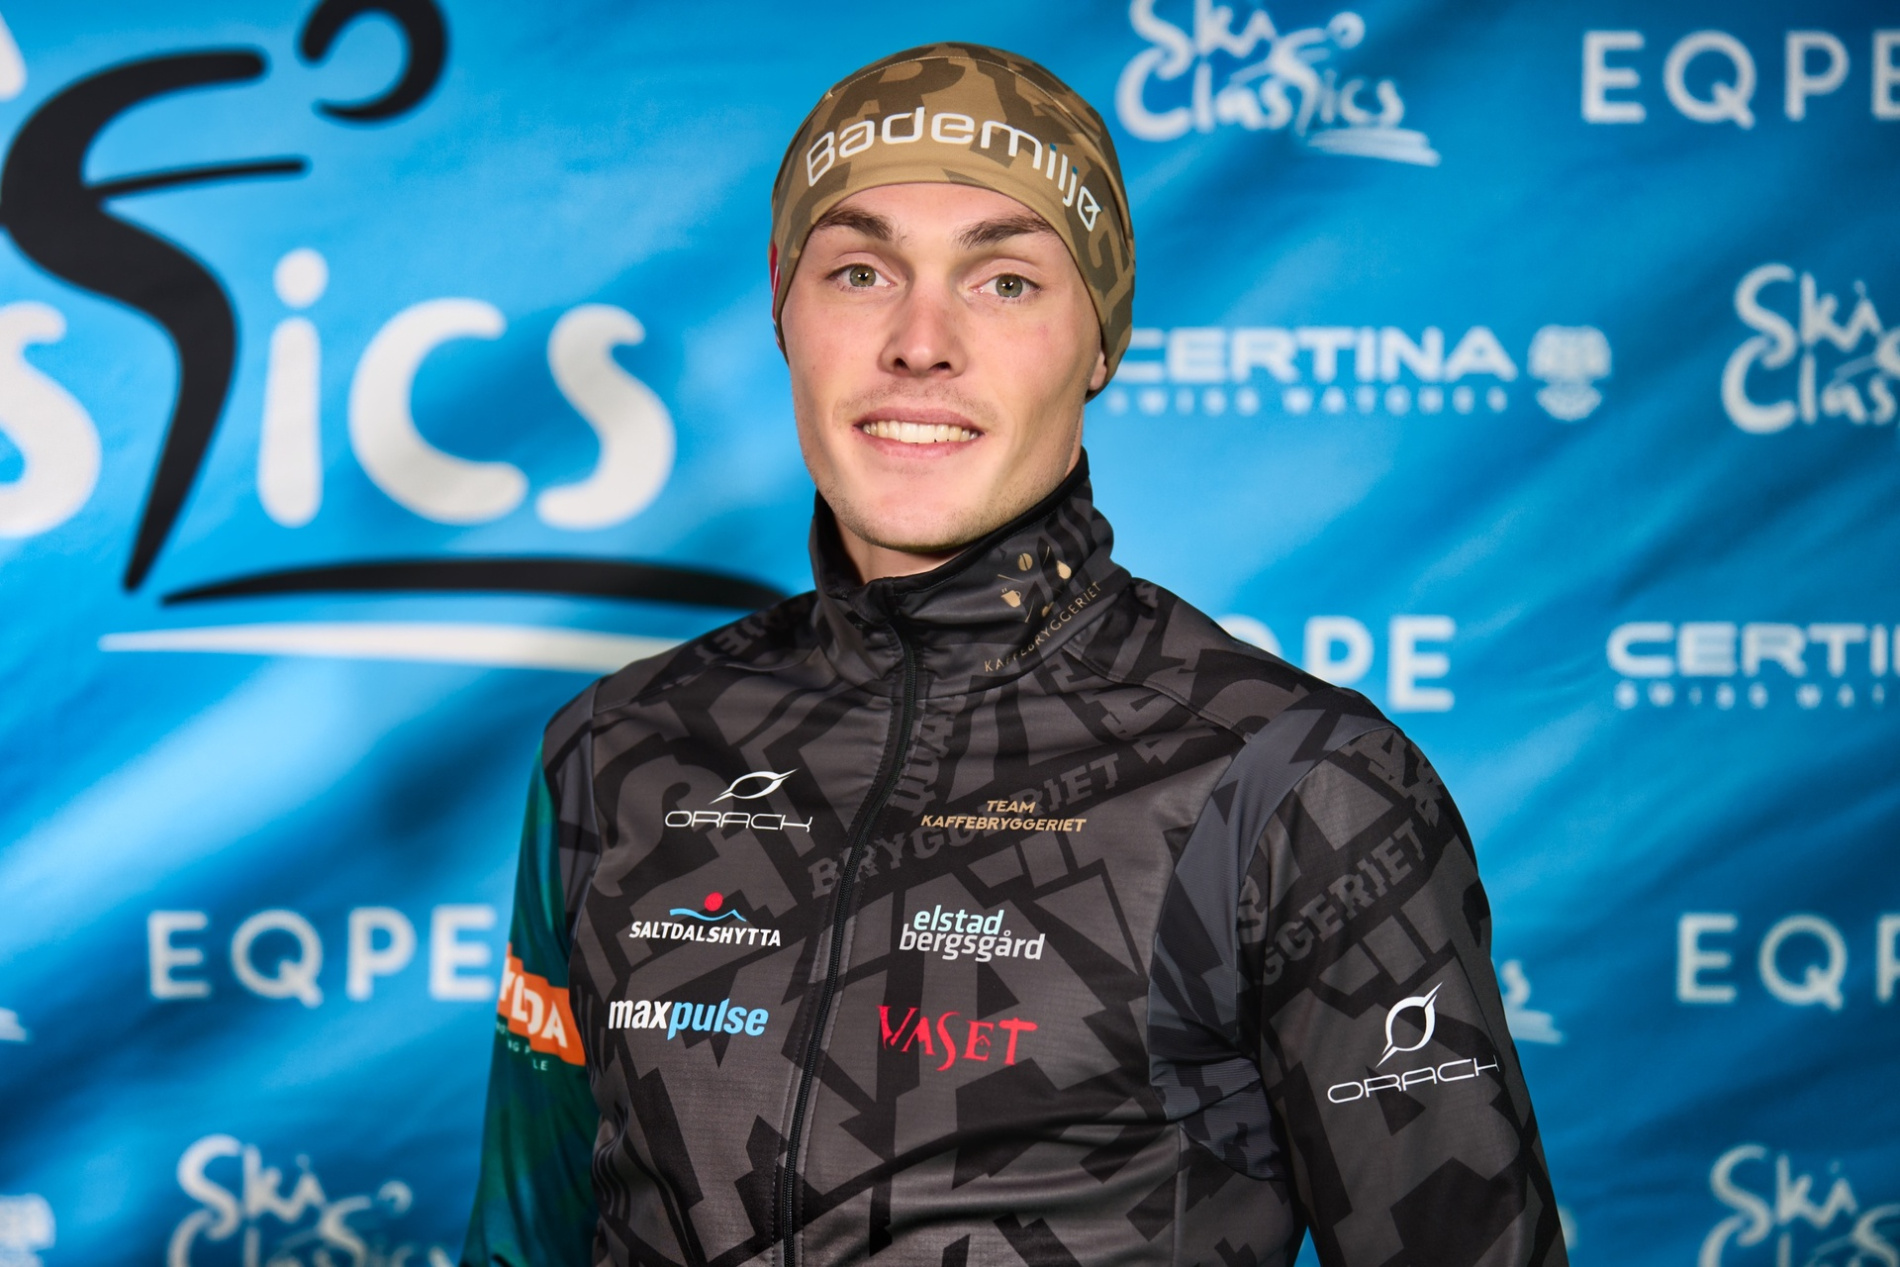 Фото: Magnus Vesterheim from Team Kaffebryggeriet. Photo: Skiclassics